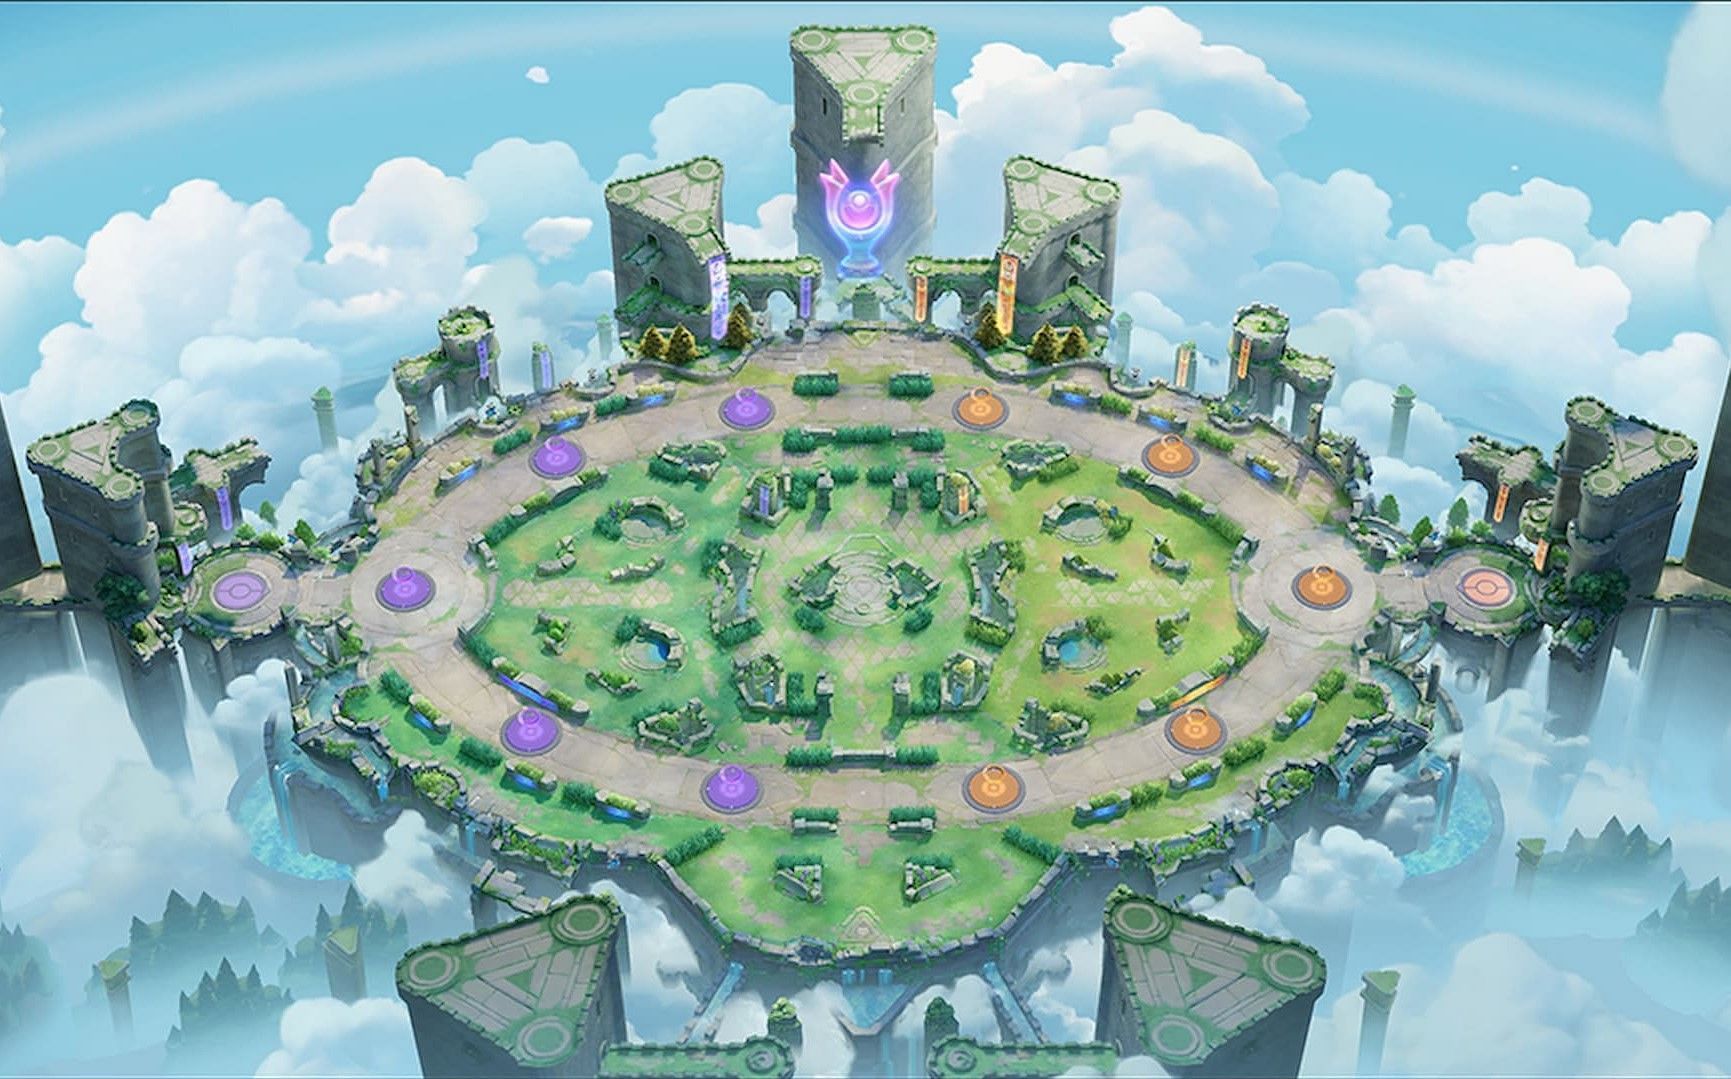 Theia Sky Ruins (image via The Pokemon Company)